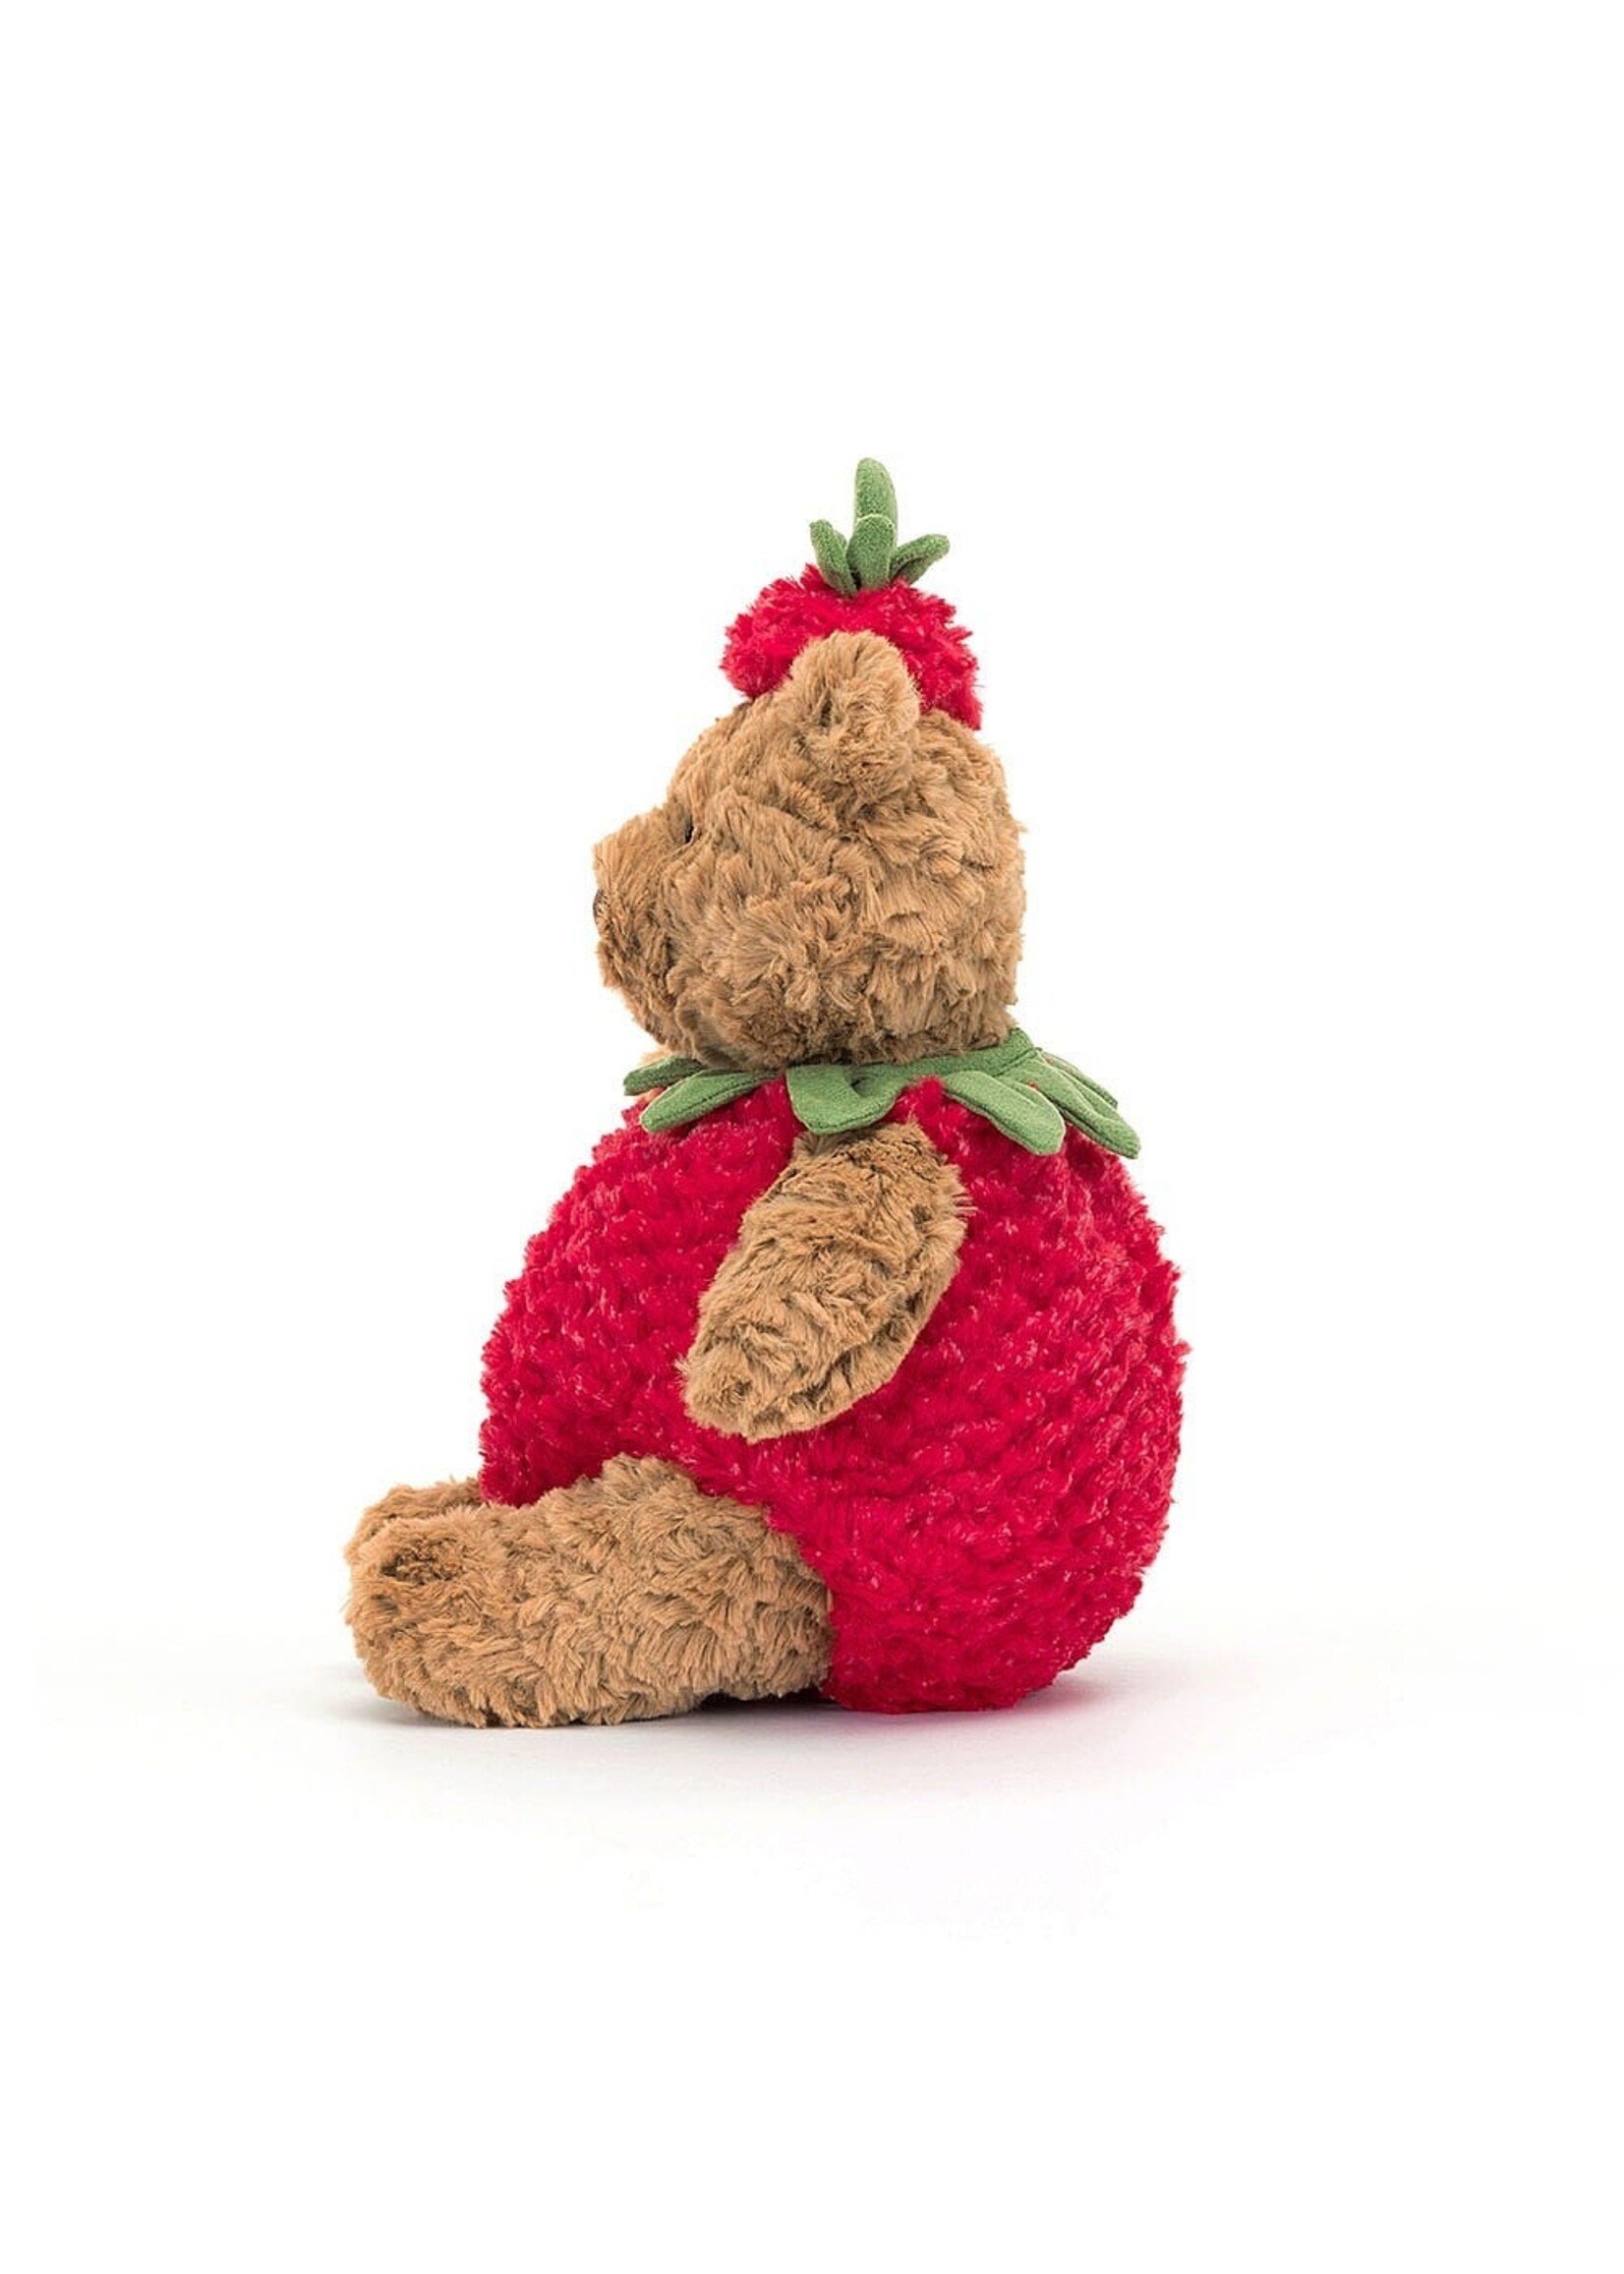 Jellycat Bartholomew Bear Strawberry